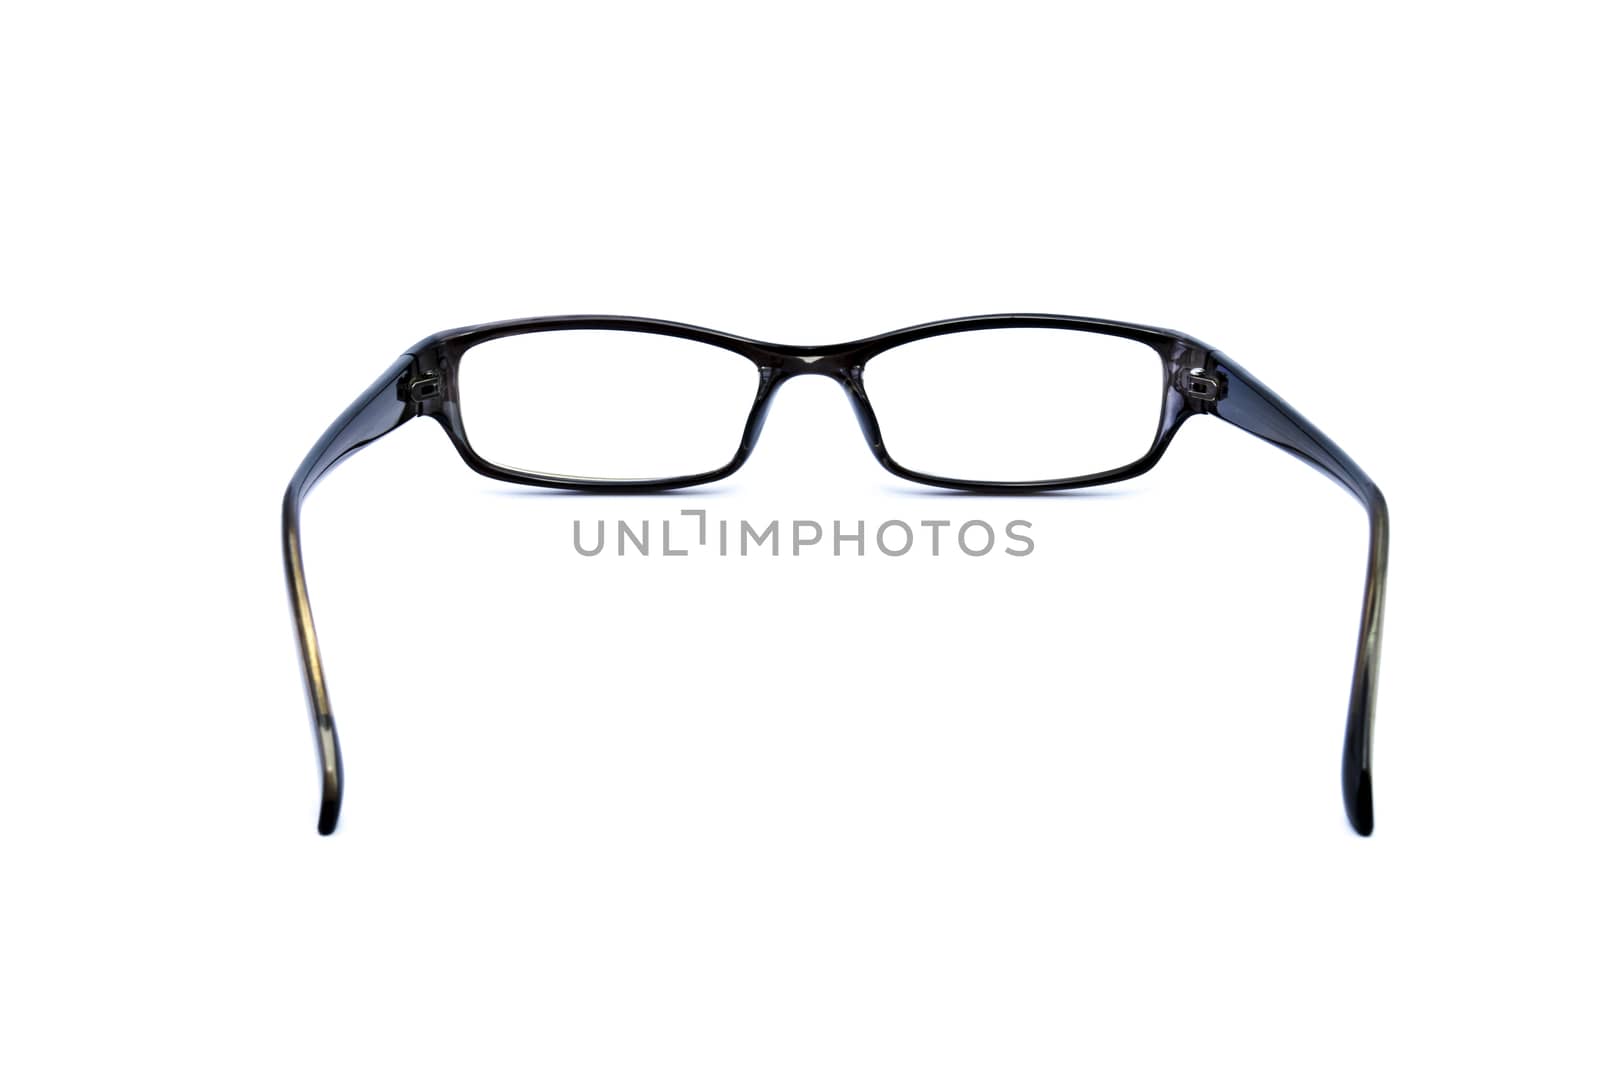 Black glasses to improve eyesight isolated on white background by teerawit